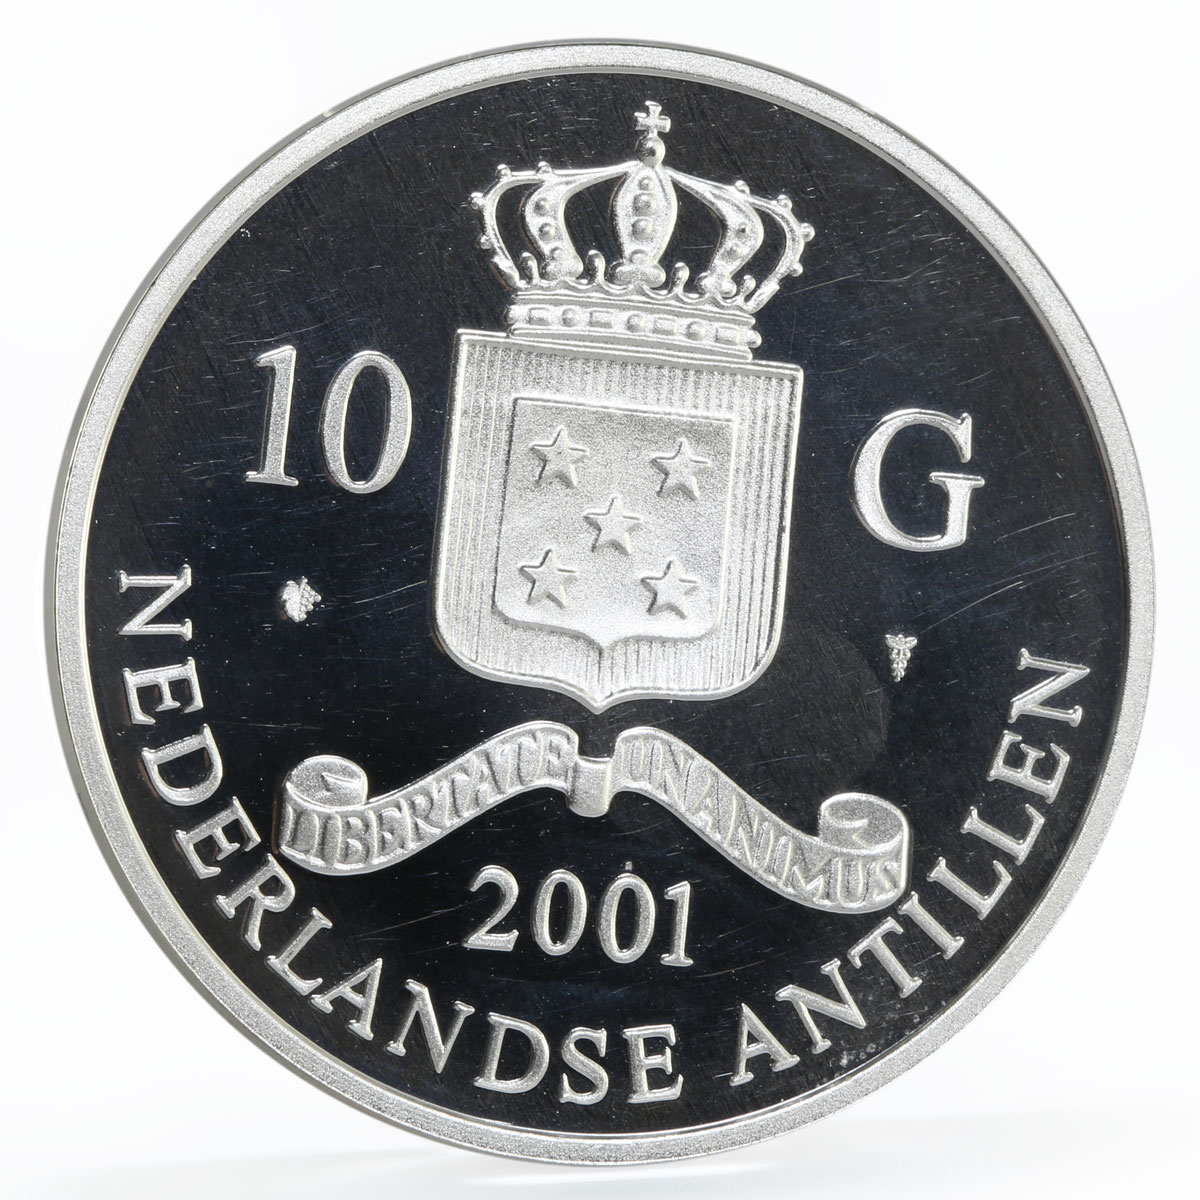 Netherlands Antilles 10 gulden Philipp VI gilded proof silver coin 2001